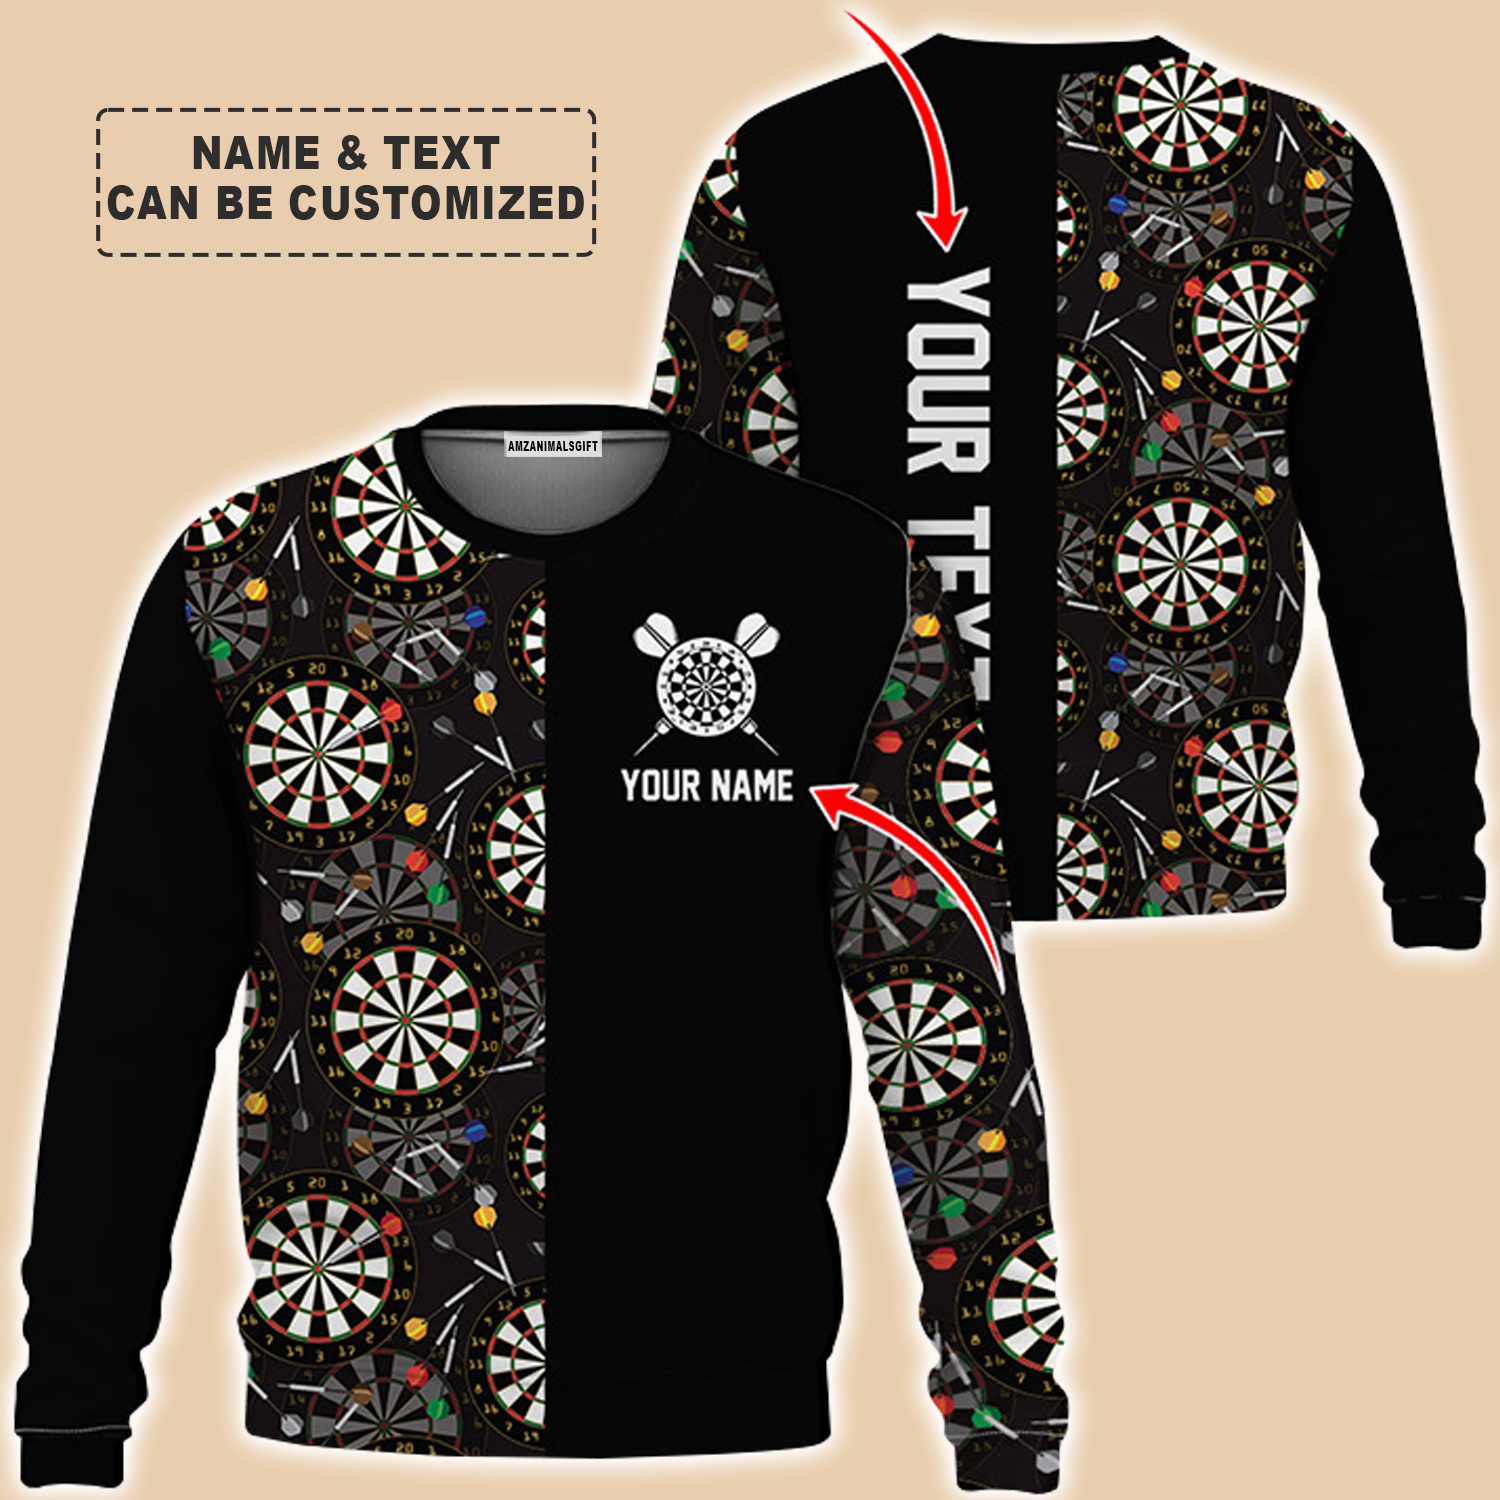 Personalized Name & Text Darts Sweatshirt, Customized Name Watercolor Dartboard Sweatshirt For Men & Women - Gift For Darts Lovers, Darts Players